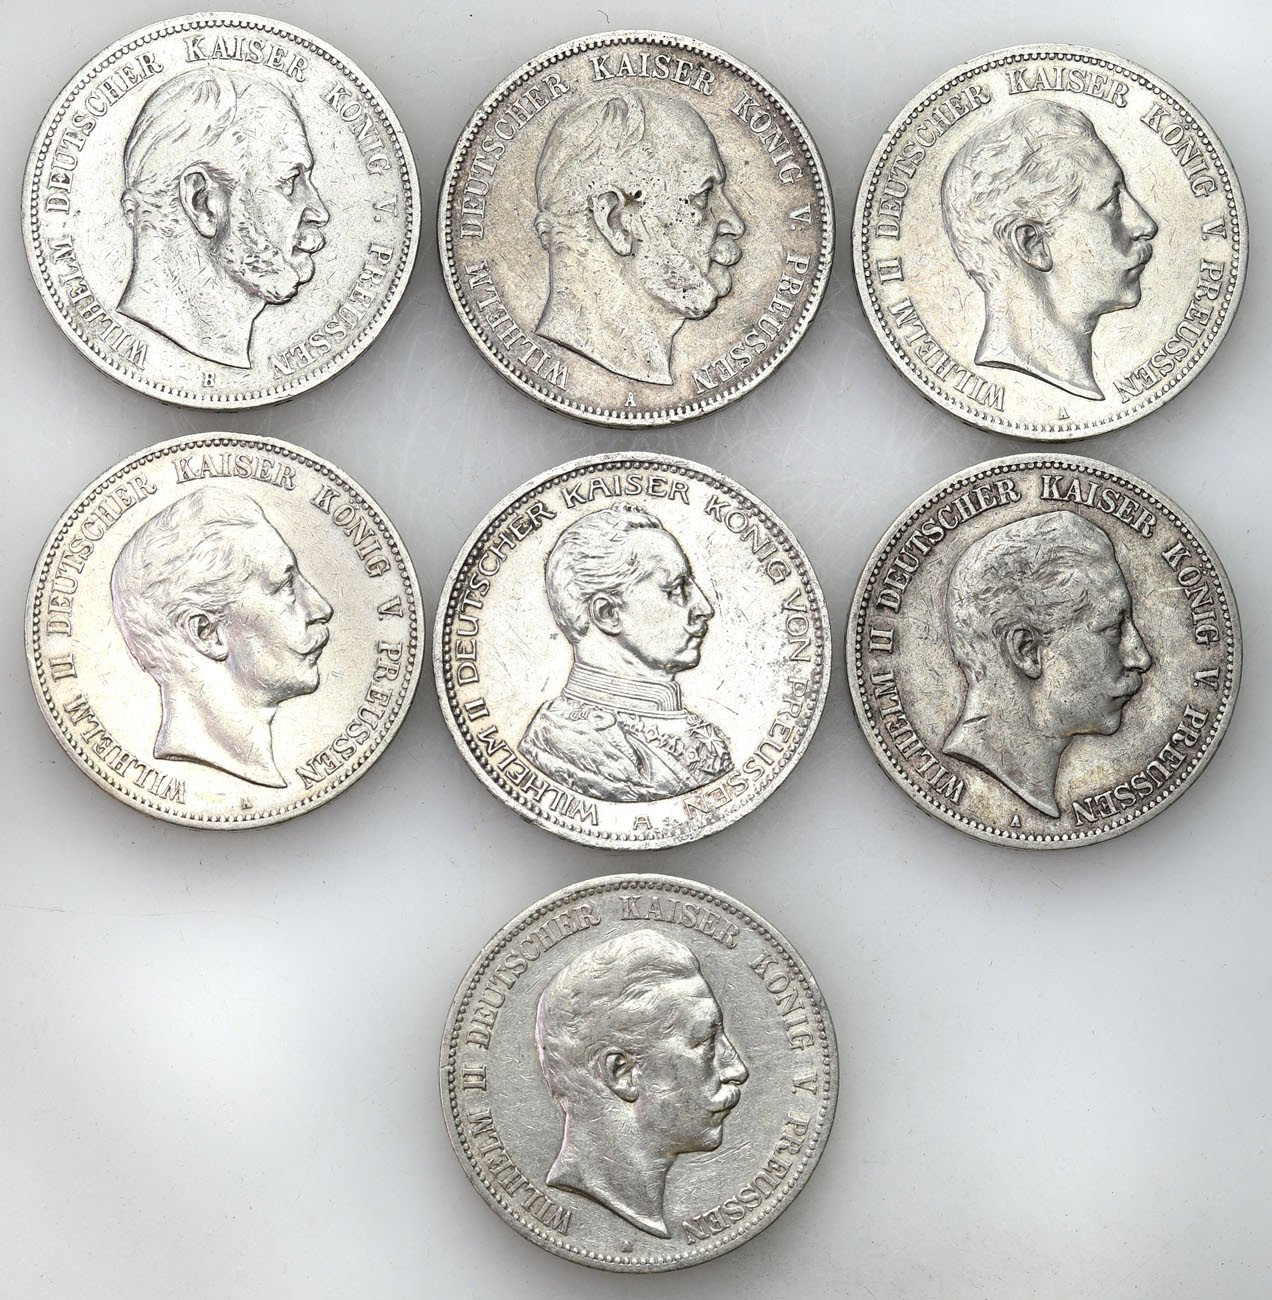 Niemcy, Prusy. 5 marek 1874-1914, zestaw 7 monet